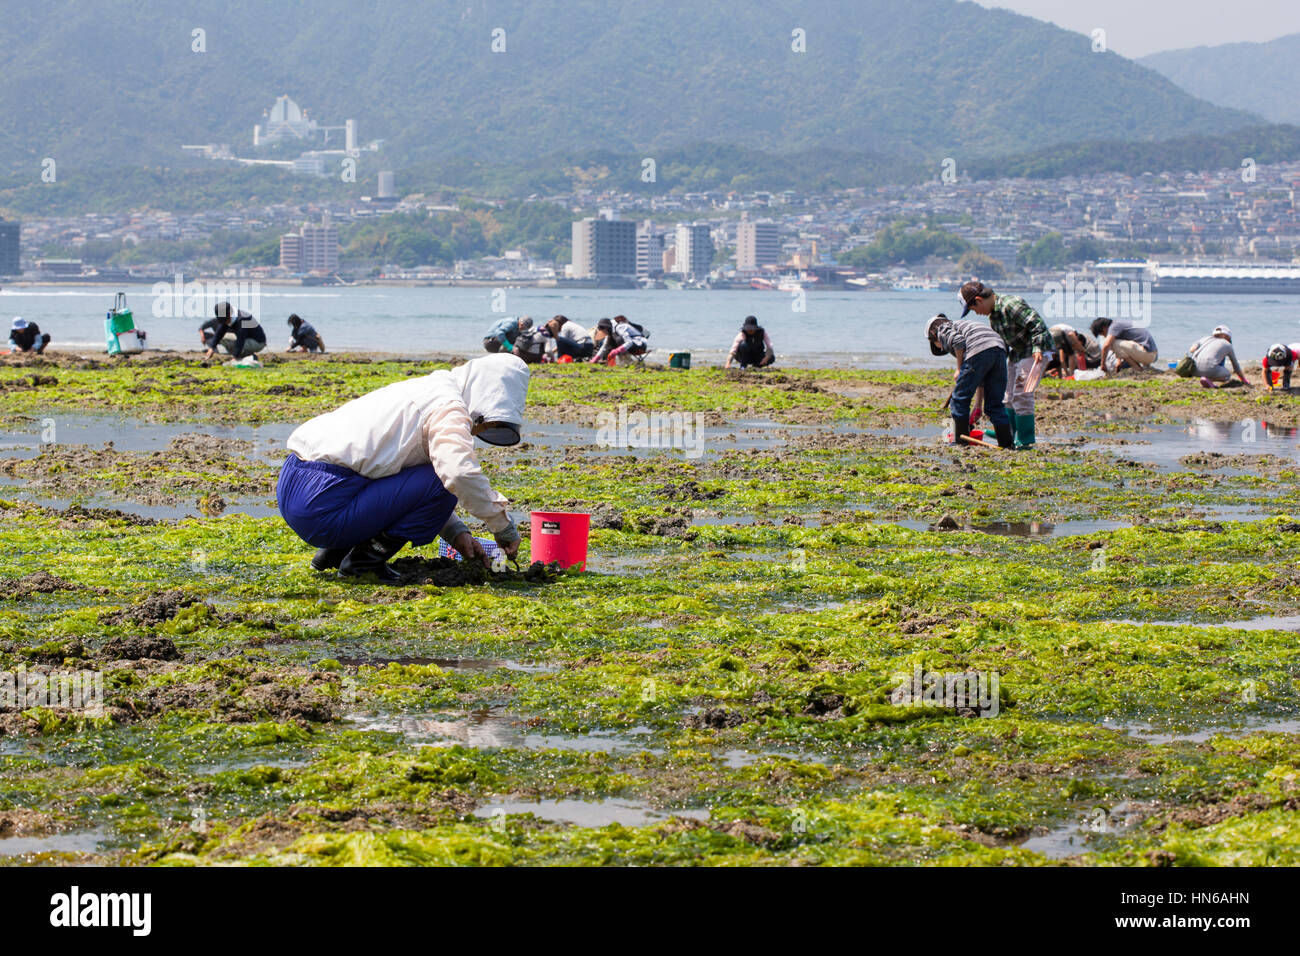 Miyajima, Japan - May 5, 2012: People digging for shellfish at low tide on the shoreline of Itsukushima island - popularly known as Miyajima, the coll Stock Photo